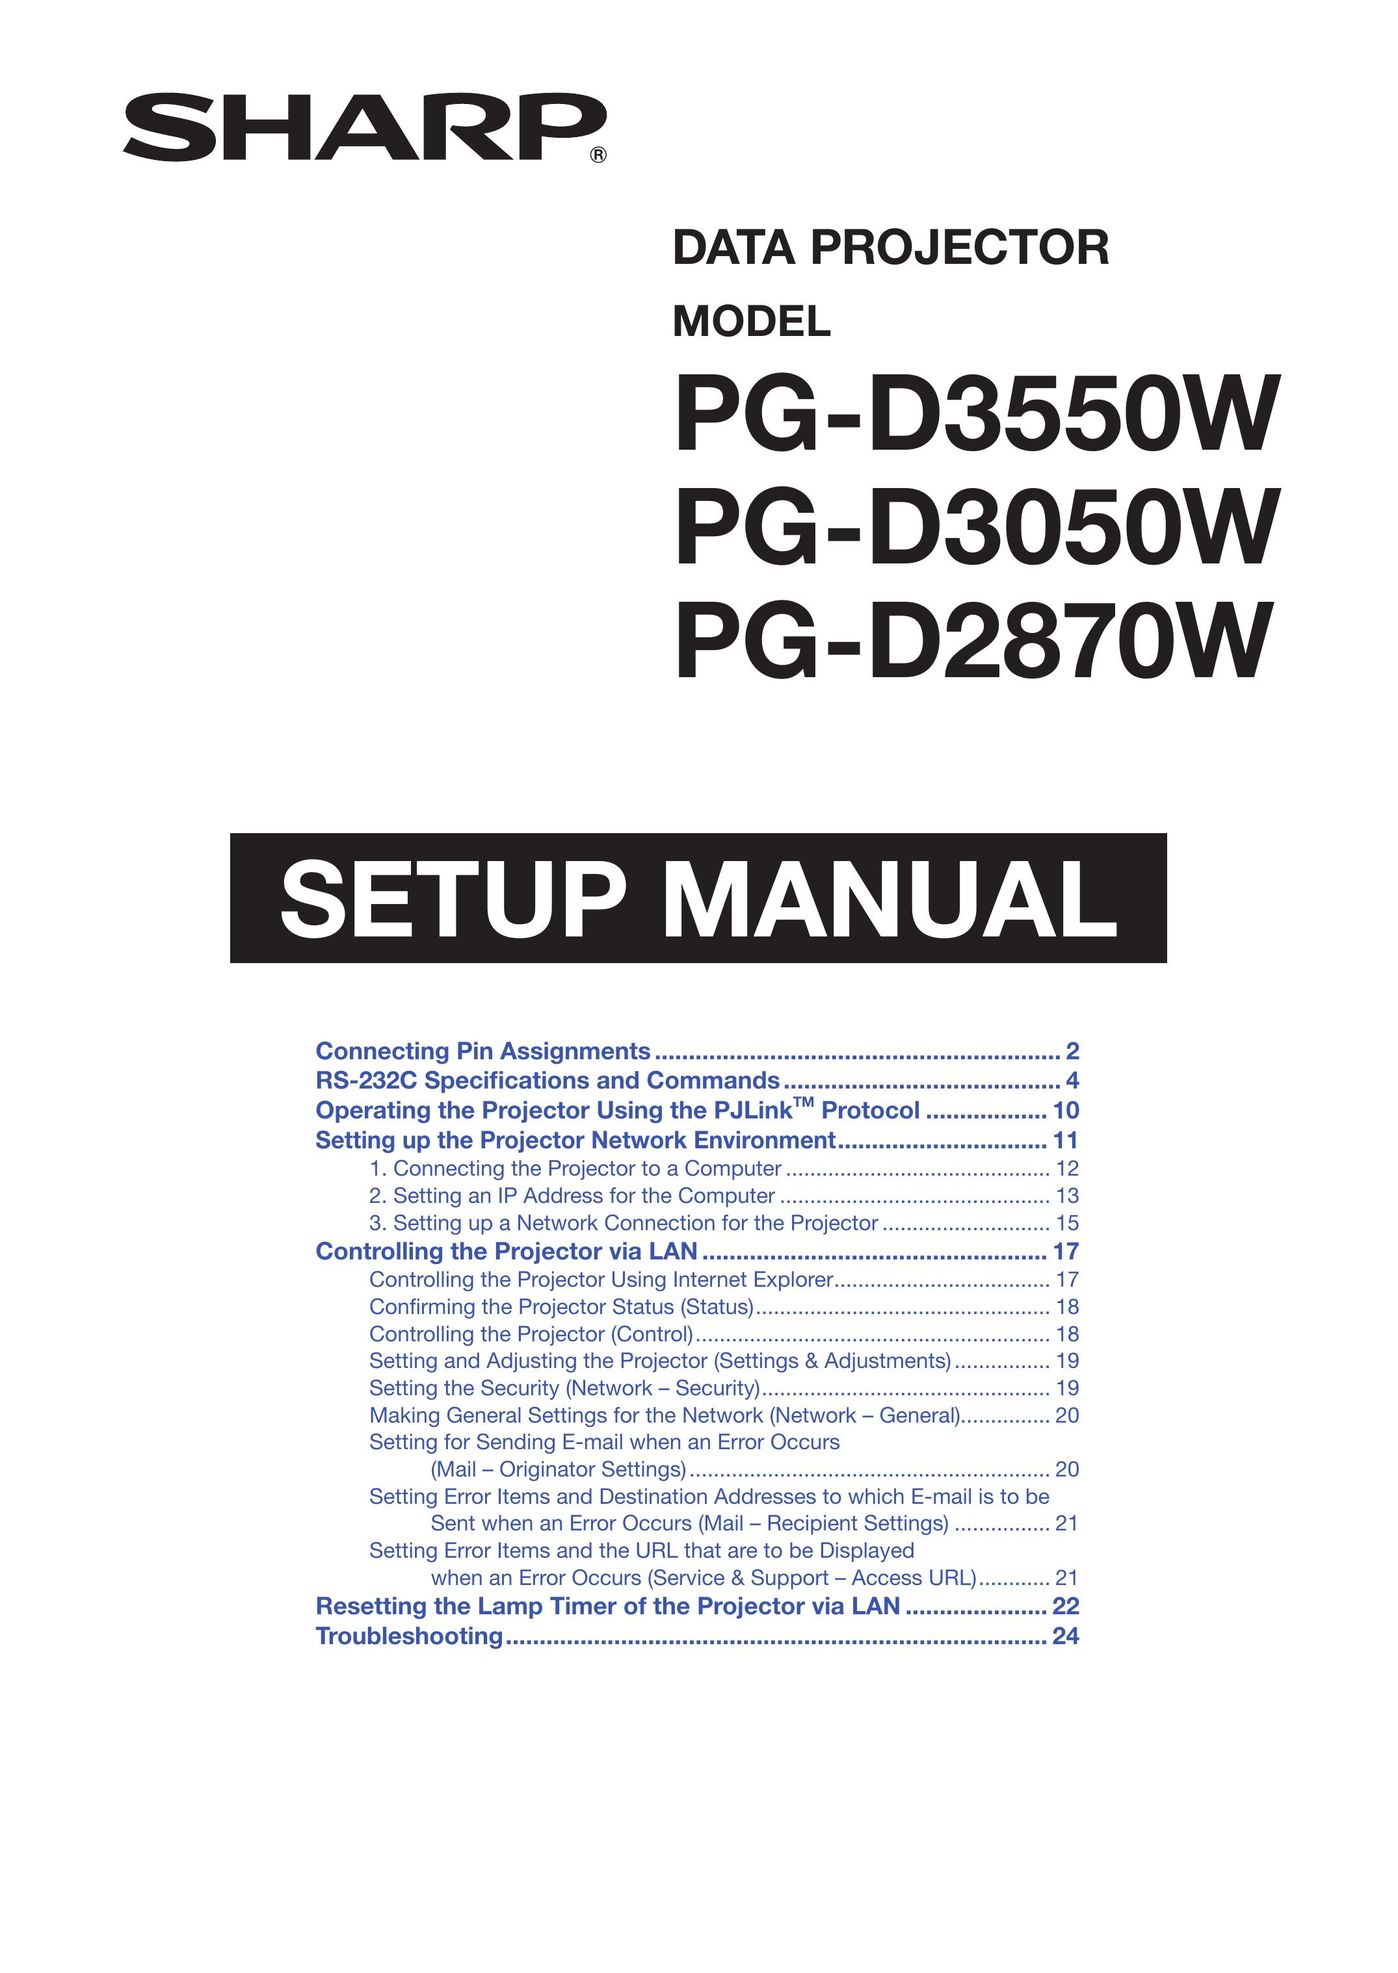 Sharp PG-D3550W Projector User Manual